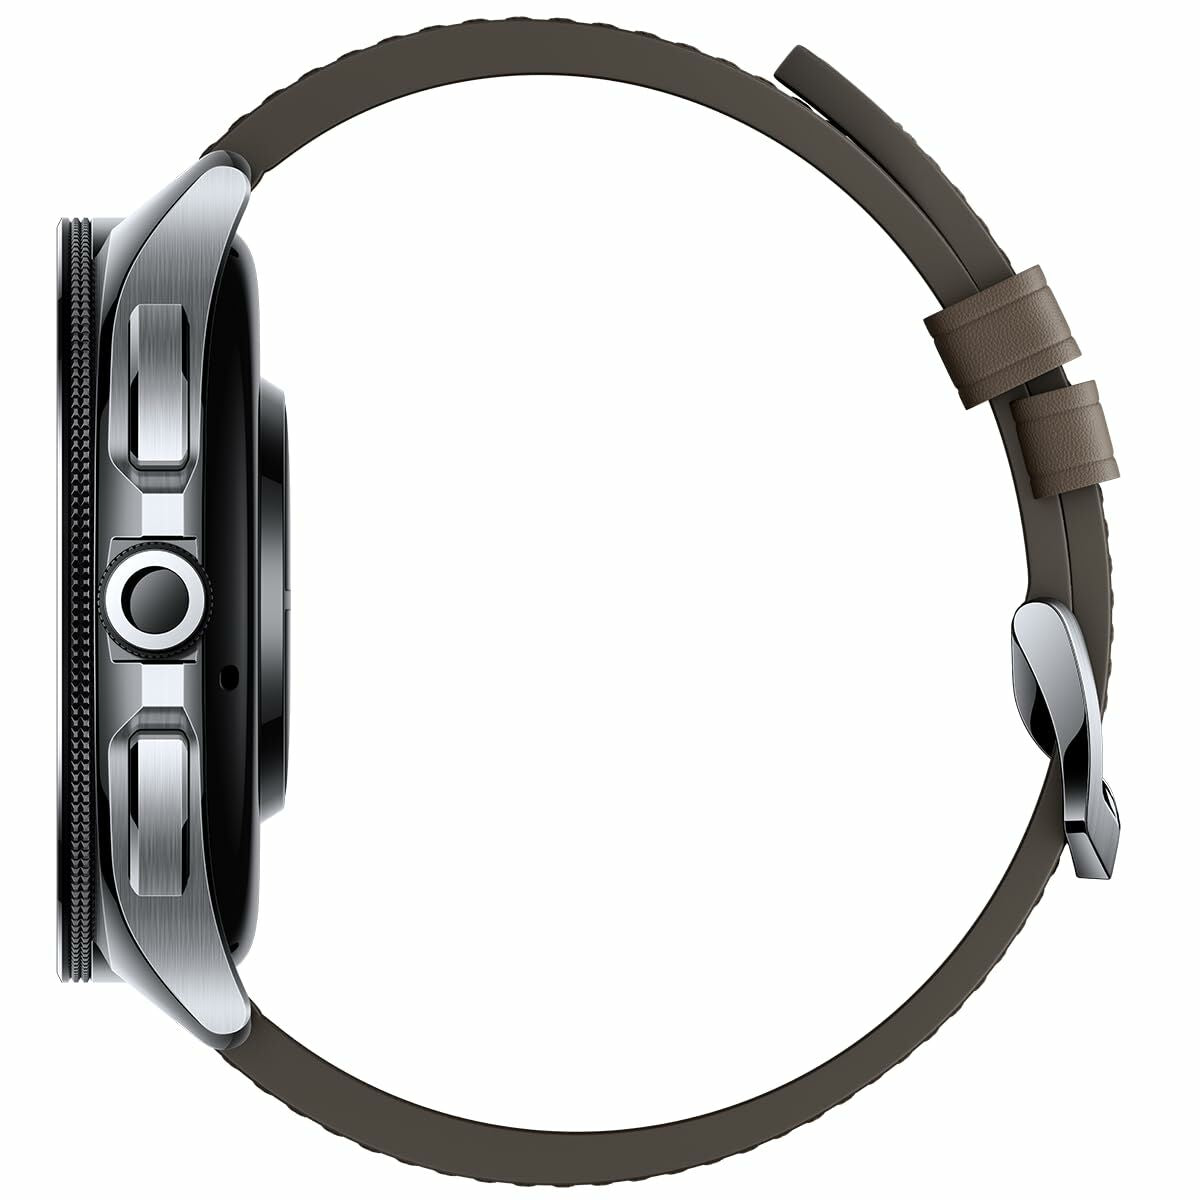 Kaufe Smartwatch Xiaomi Watch 2 Pro bei AWK Flagship um € 246.00